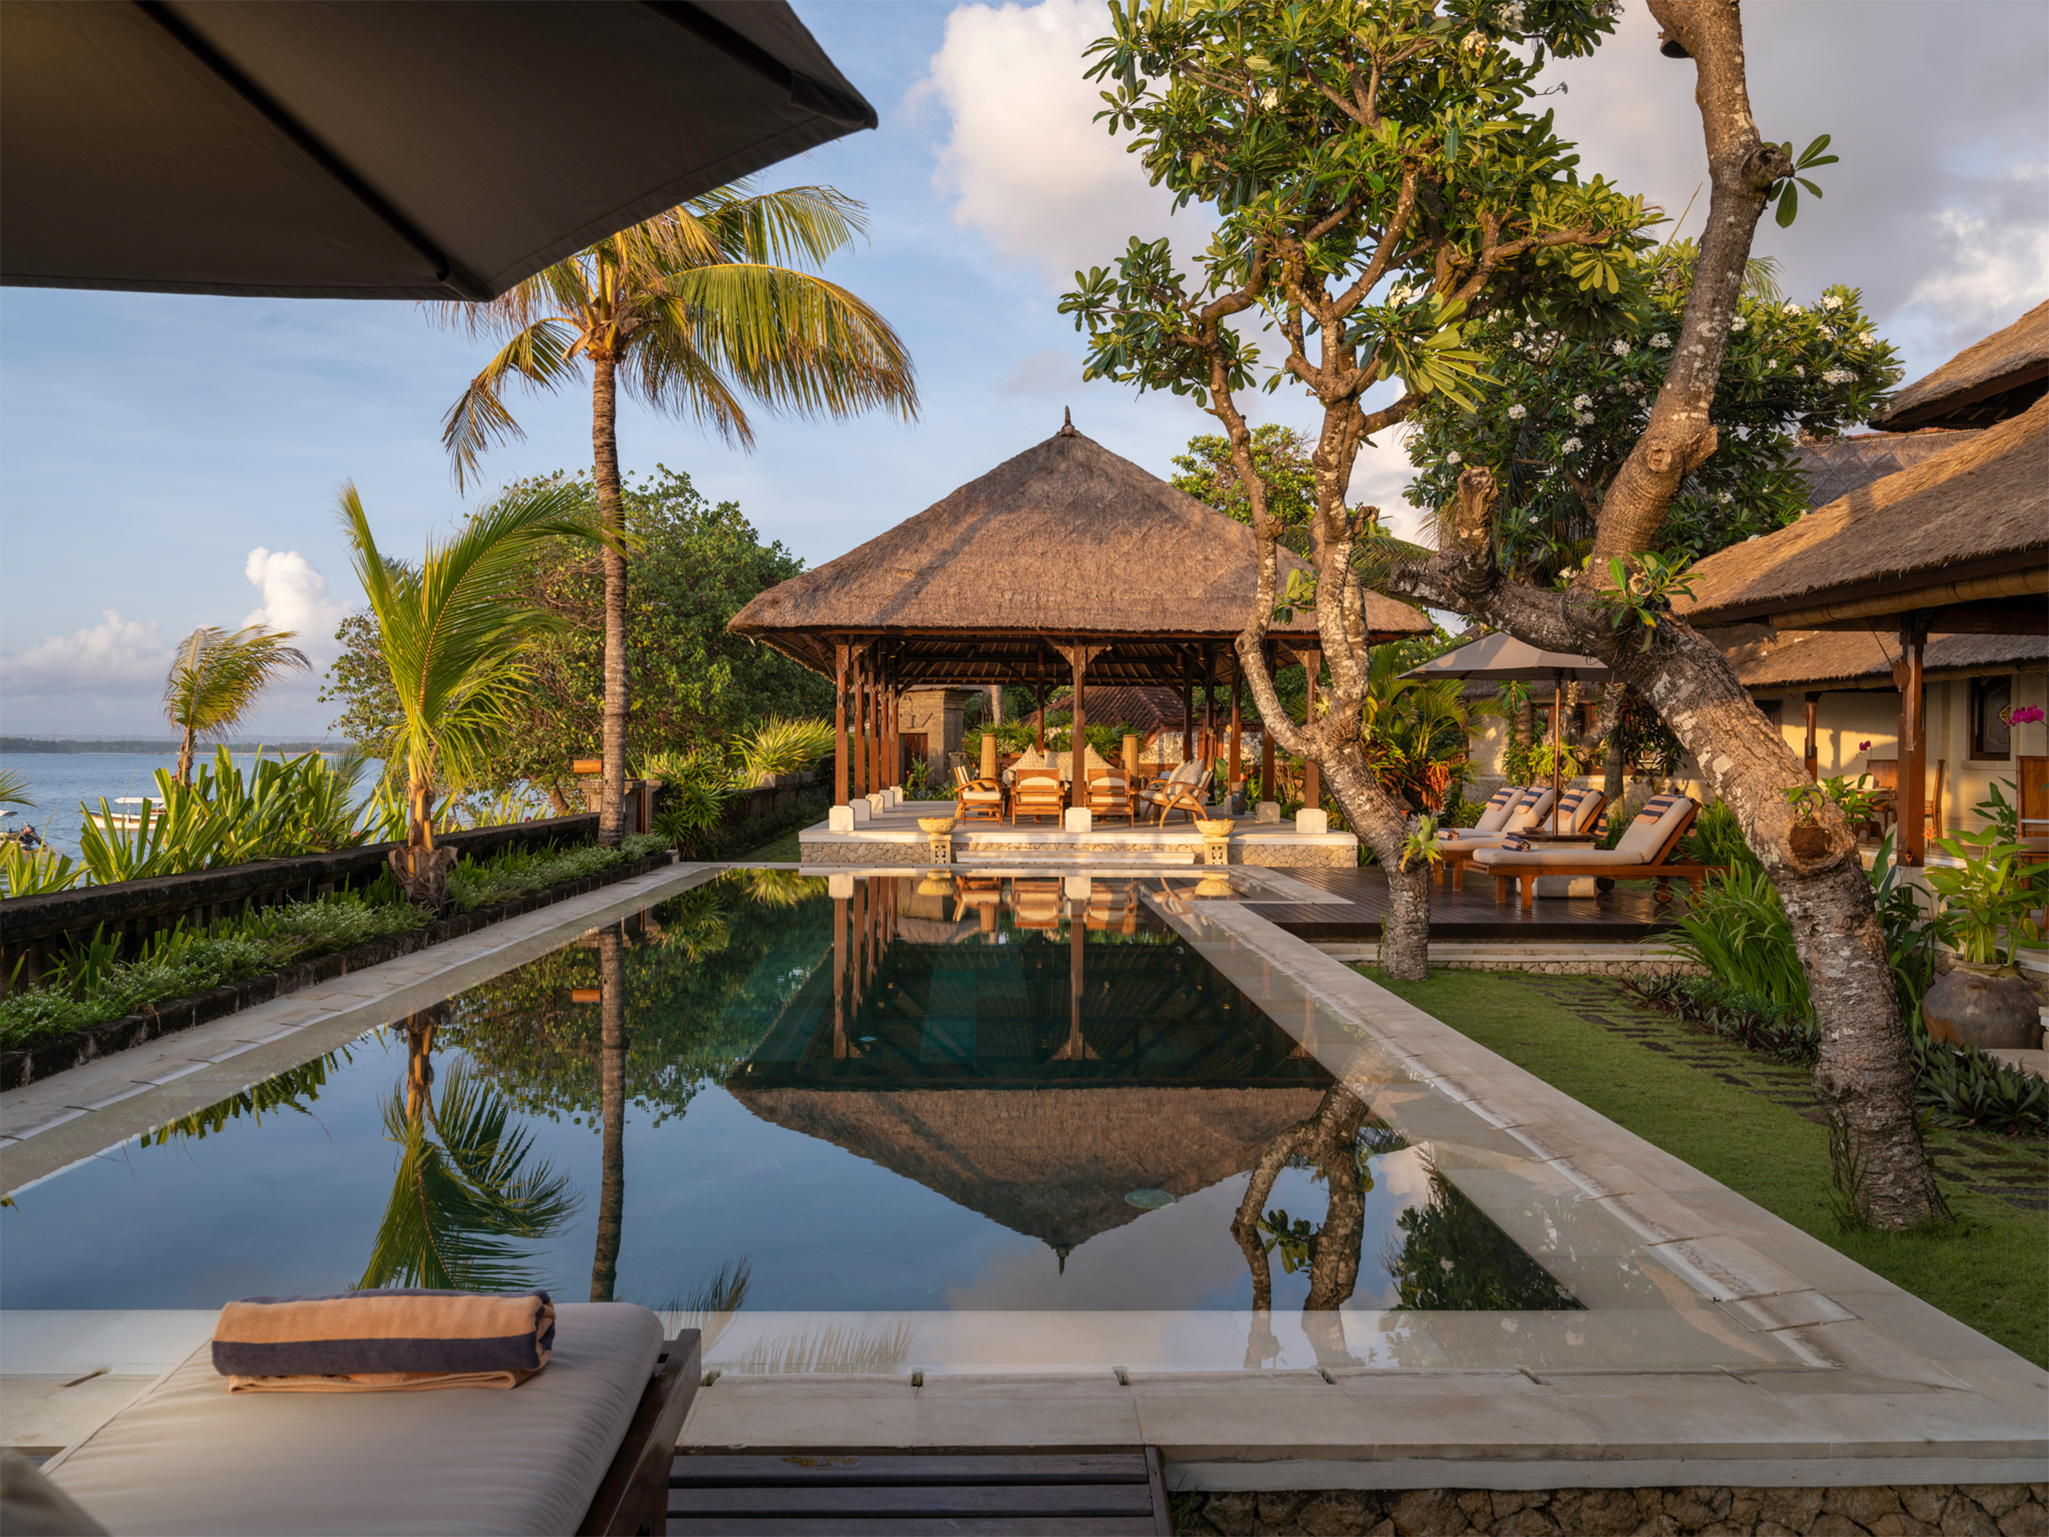 Villa Cemara - Private pool at sunset<br /> - Villa Cemara, Sanur, Bali